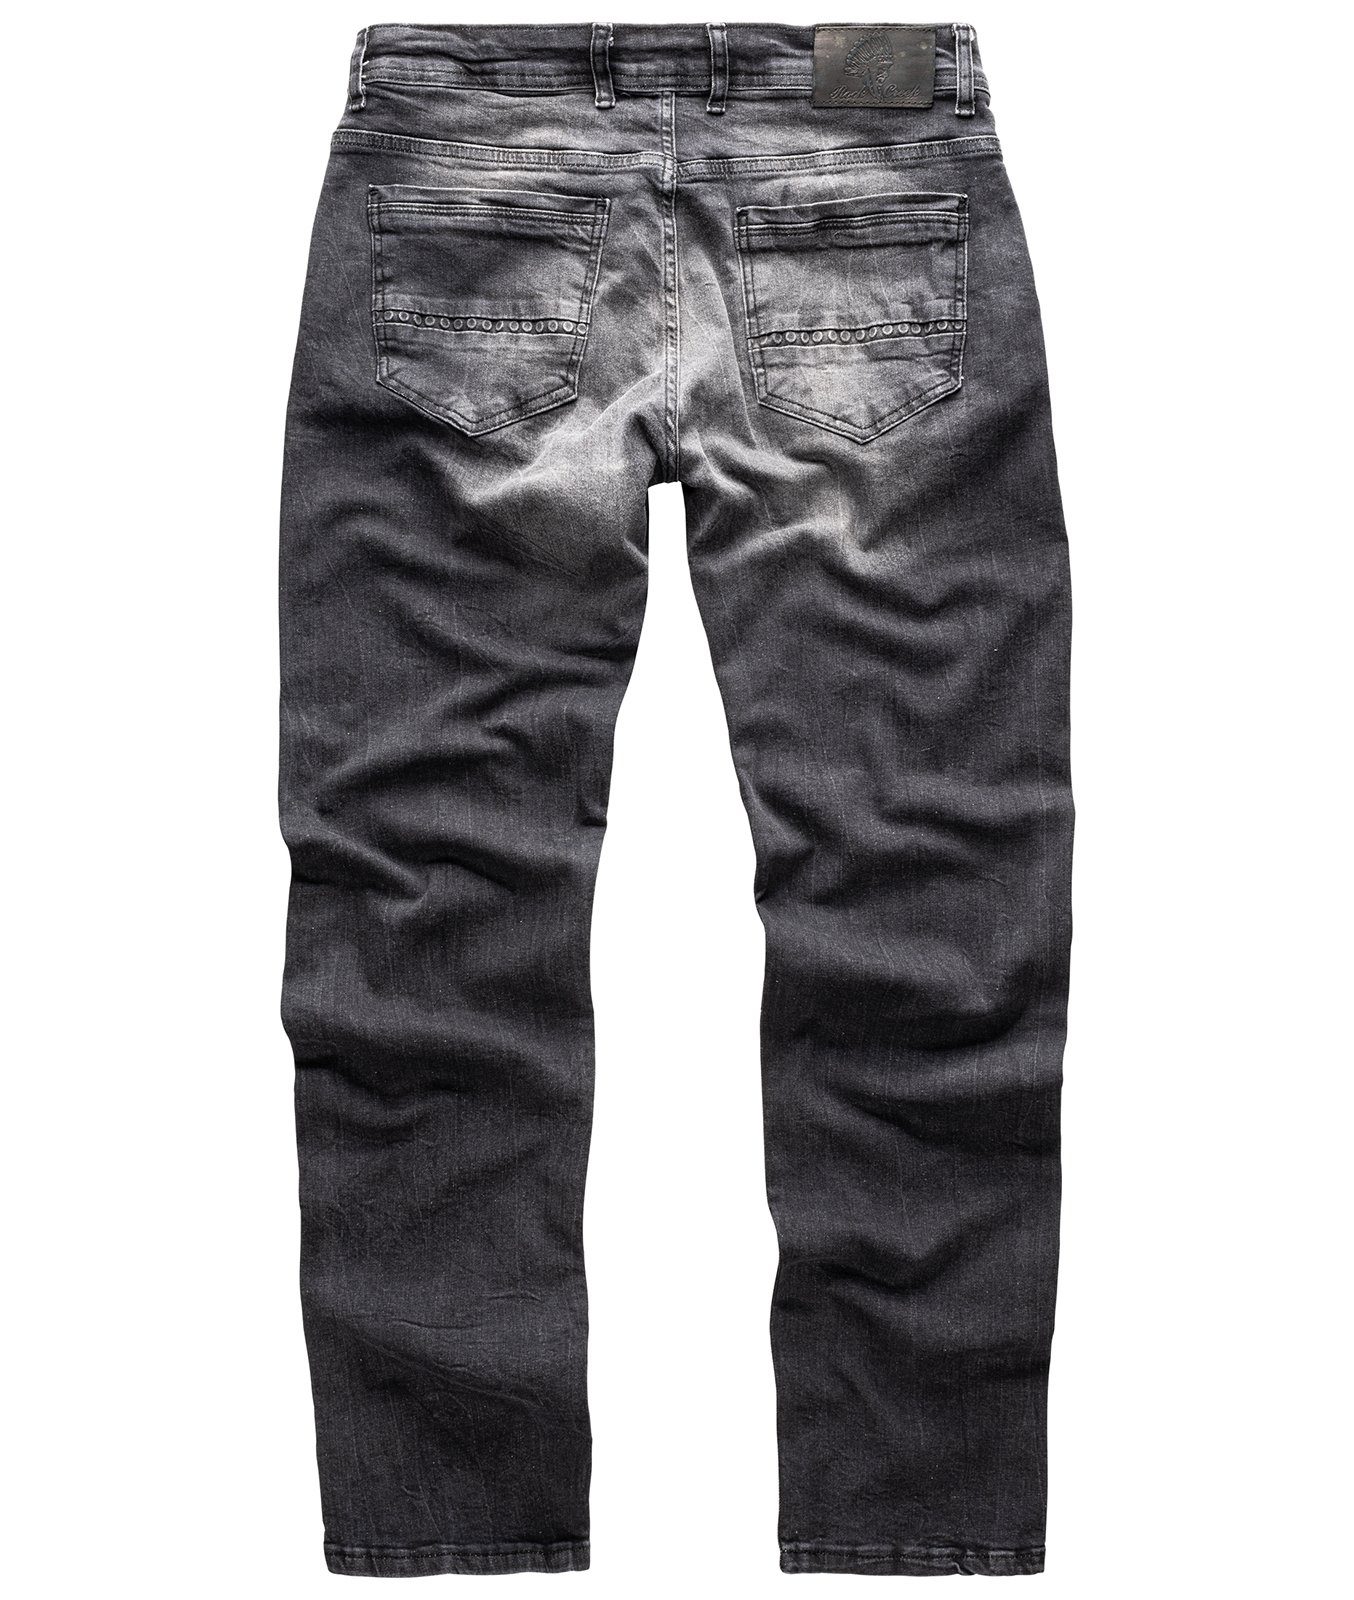 Rock Creek Straight-Jeans Herren Jeans Dunkelgrau RC-2158 Fit Regular